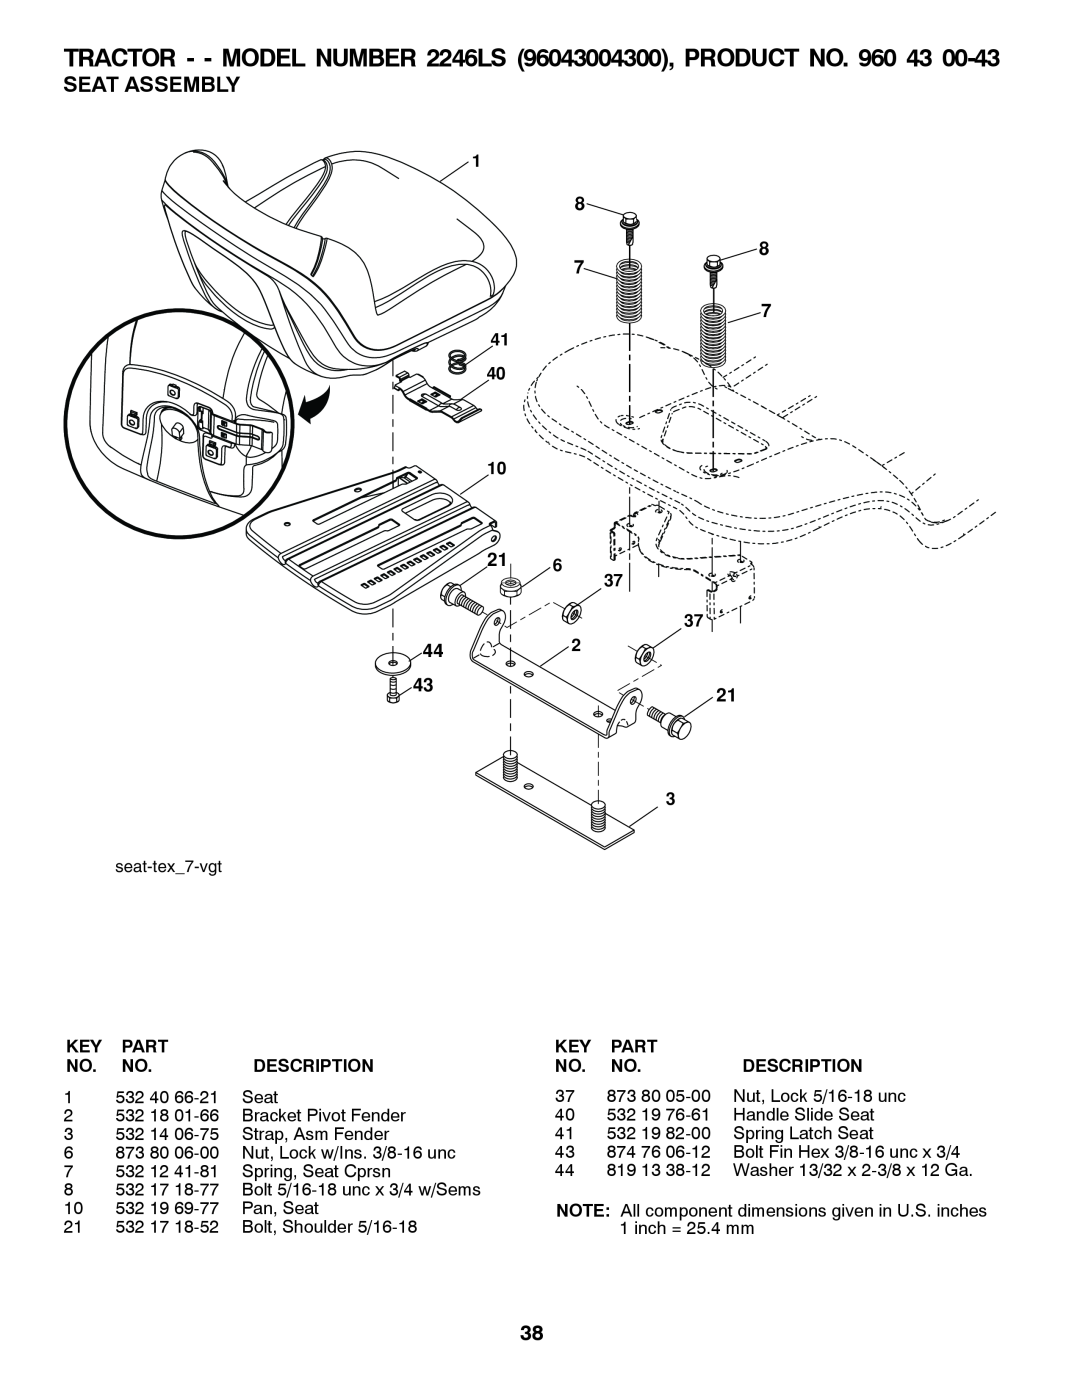 Husqvarna Seat Assembly, TRACTOR - - MODEL NUMBER 2246LS 96043004300, PRODUCT NO. 960 43, Part, Description, 532 40 